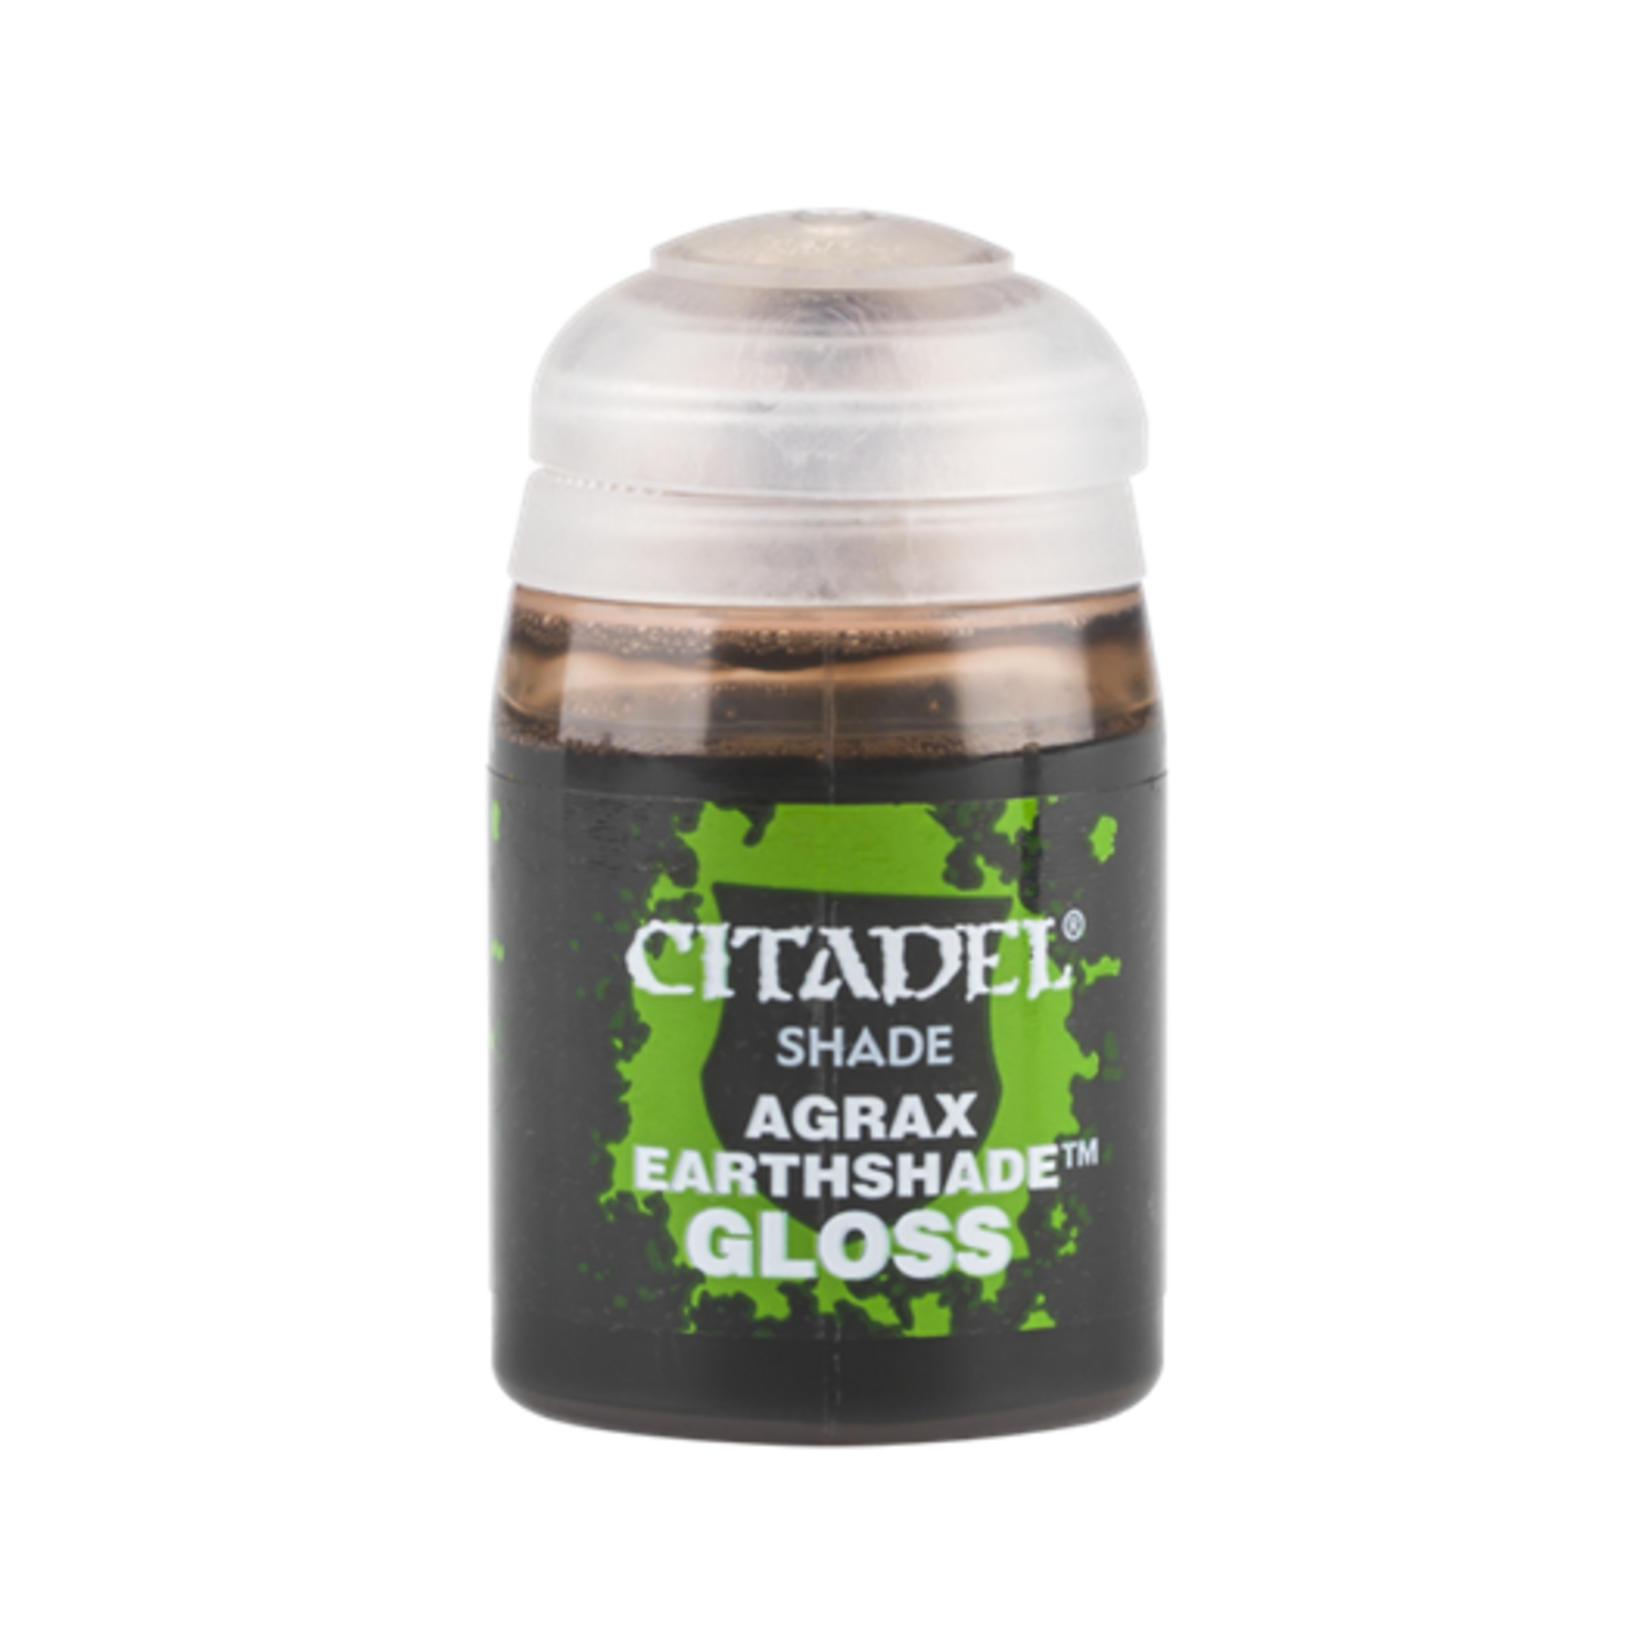 Games Workshop Citadel - Shade - Agrax Earthshade Gloss